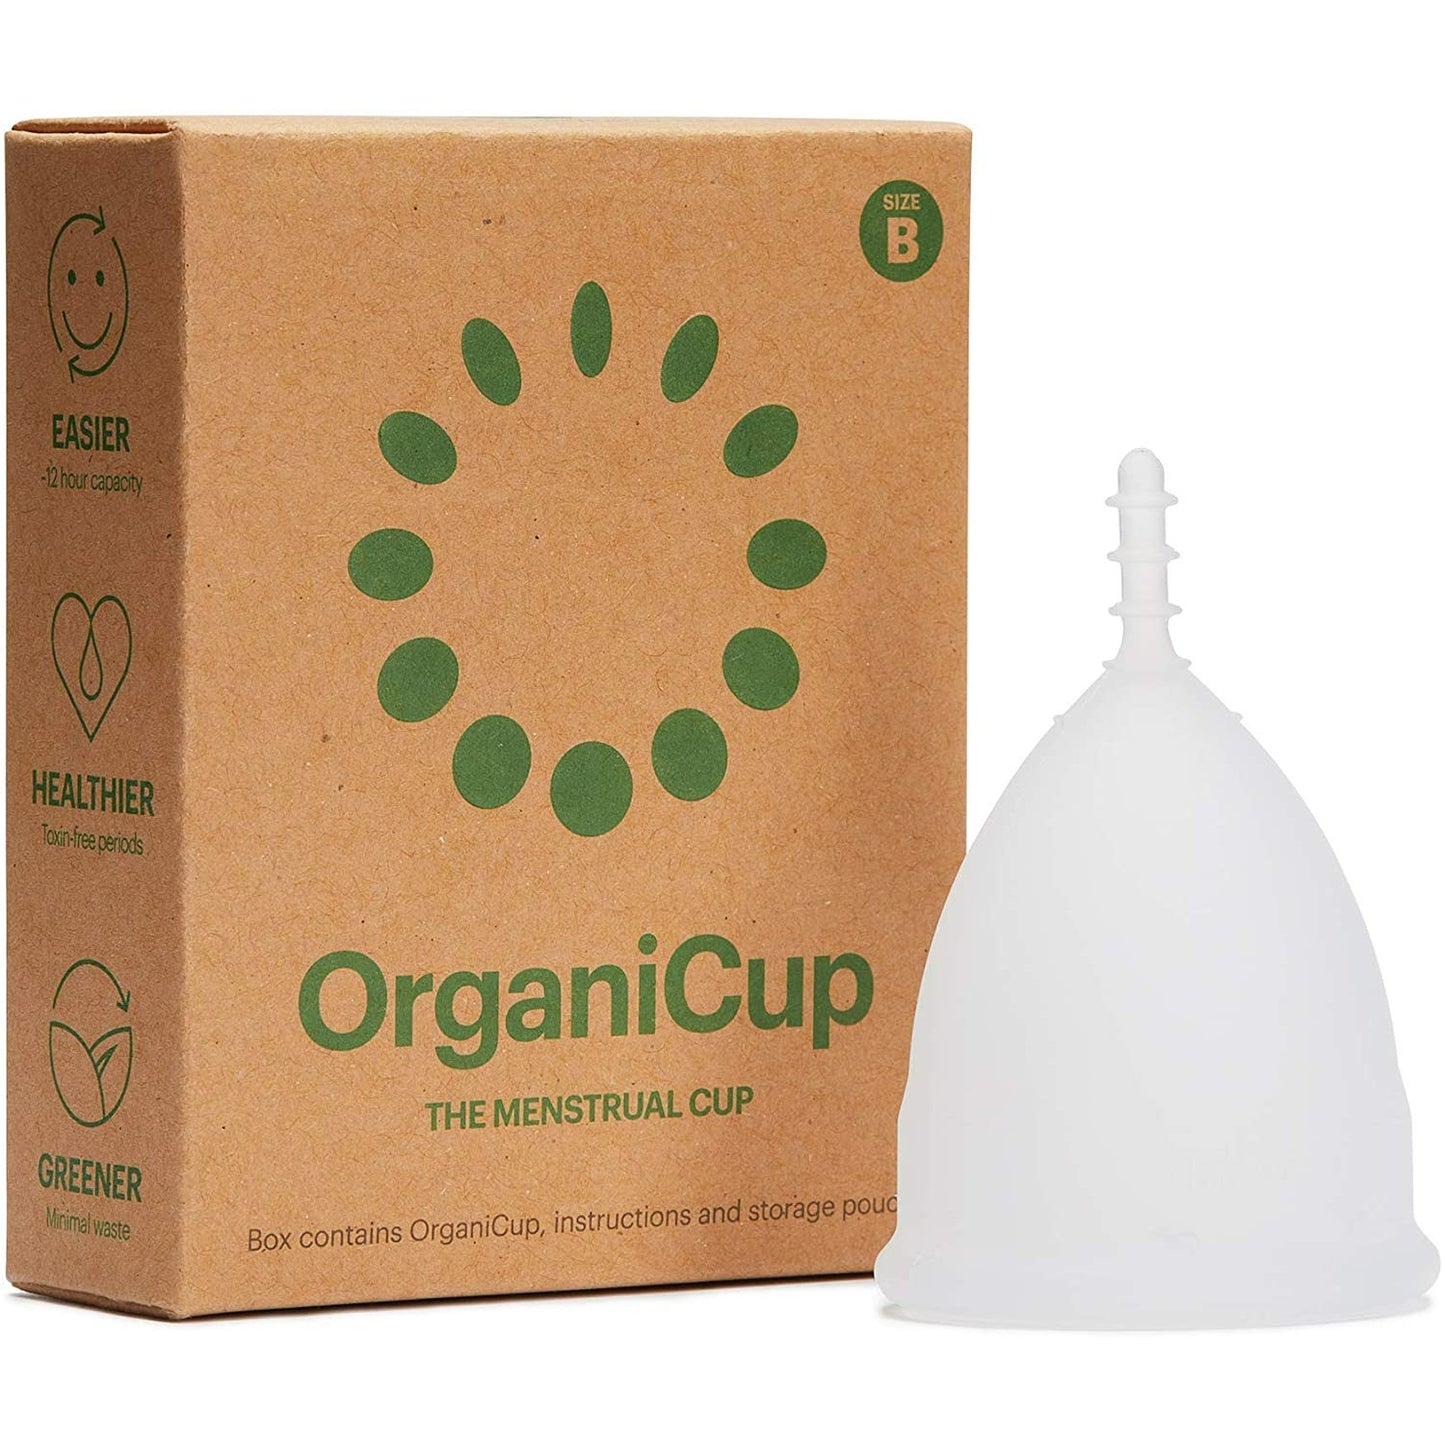 OrganiCup Menstrual Cup B-cup 15g